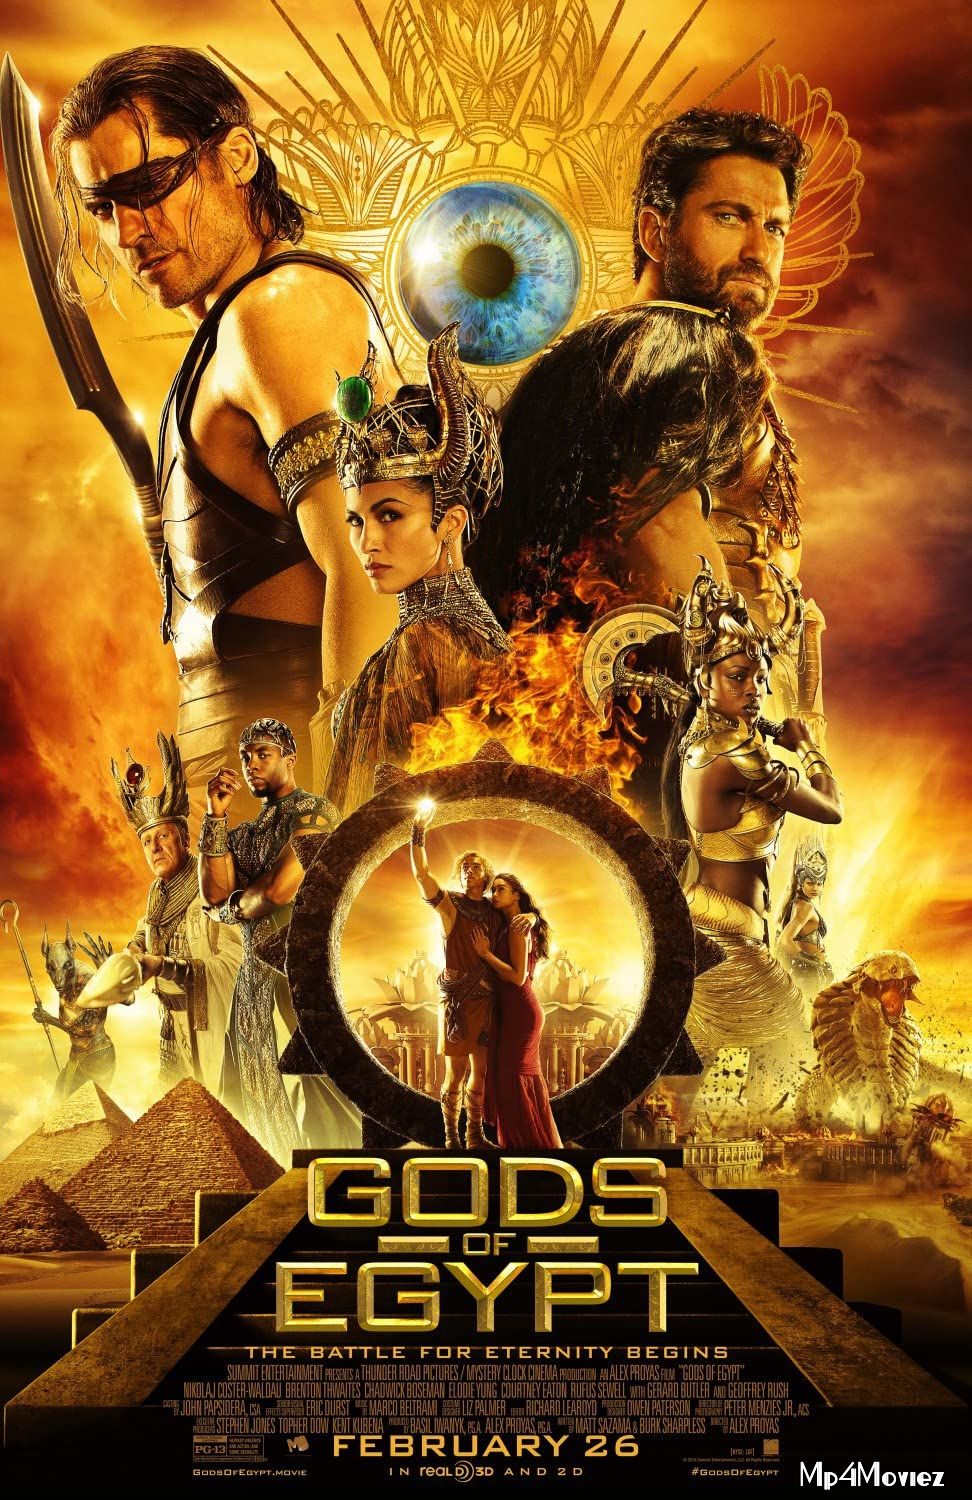 Gods of Egypt 2016 Hindi Dubbed Movie Bluray download full movie